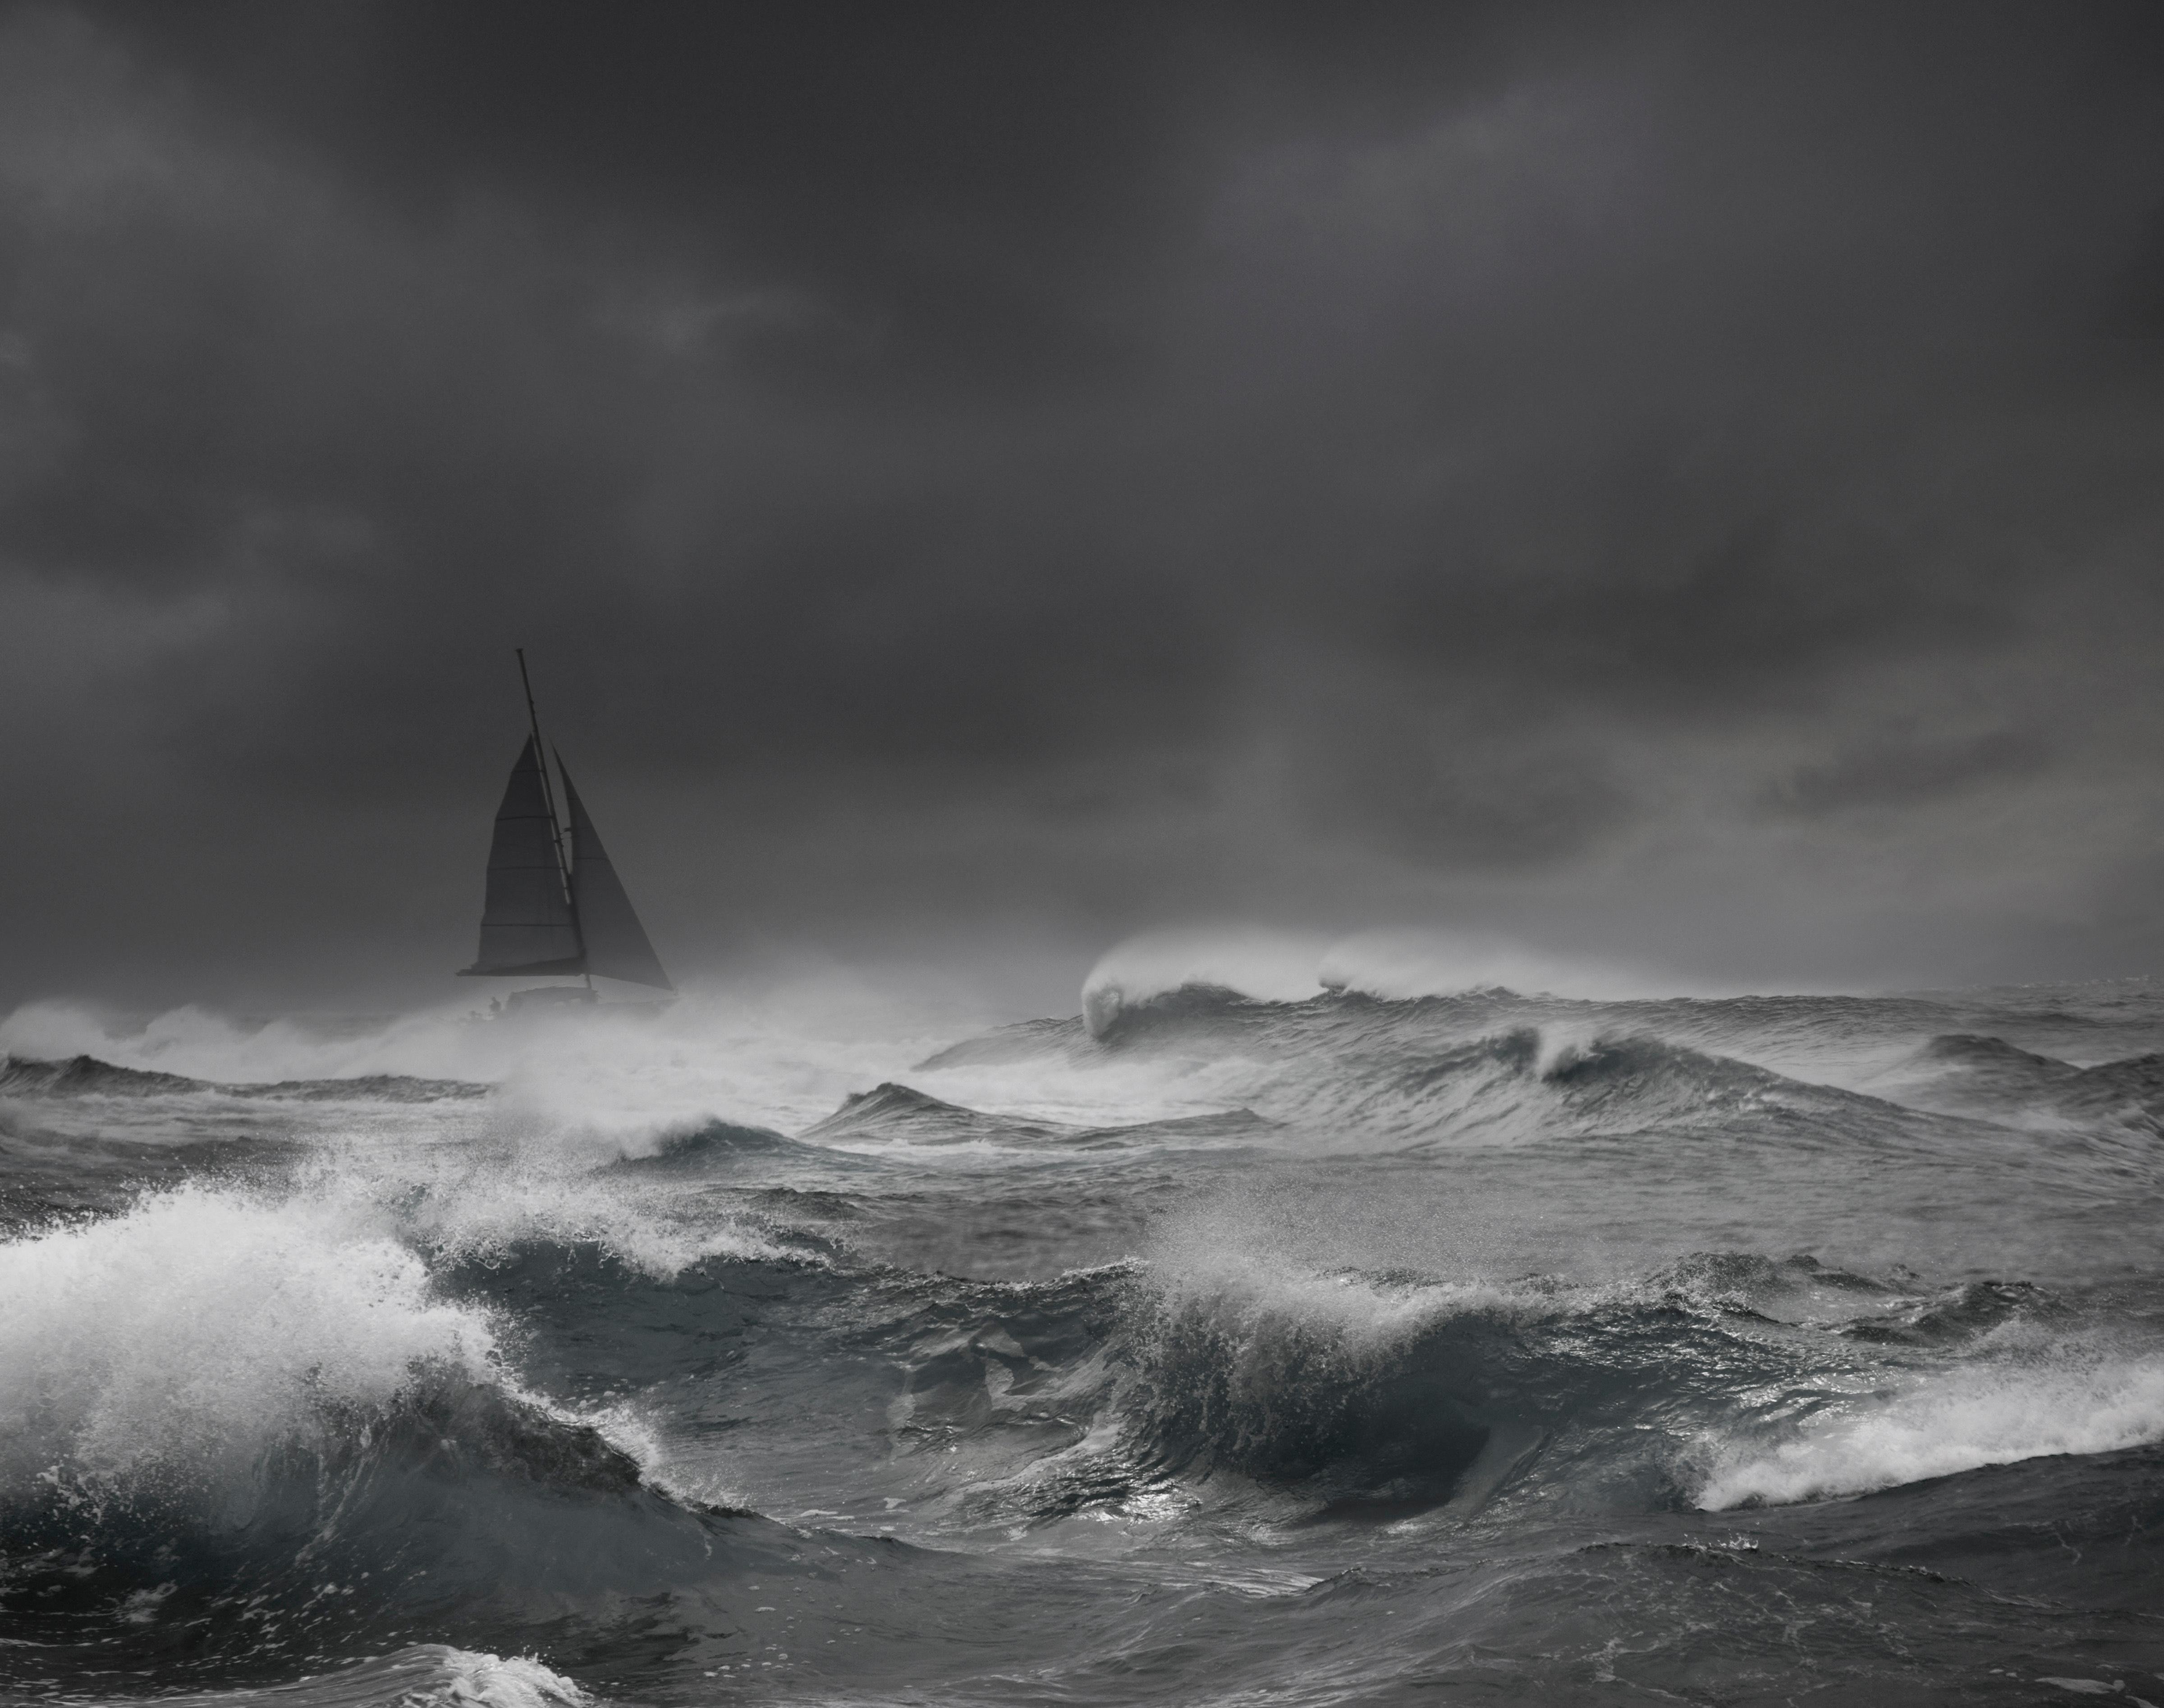 Далекий шторм. Море шторм. Корабль в шторм. Лодка в море шторм. Буря на море.